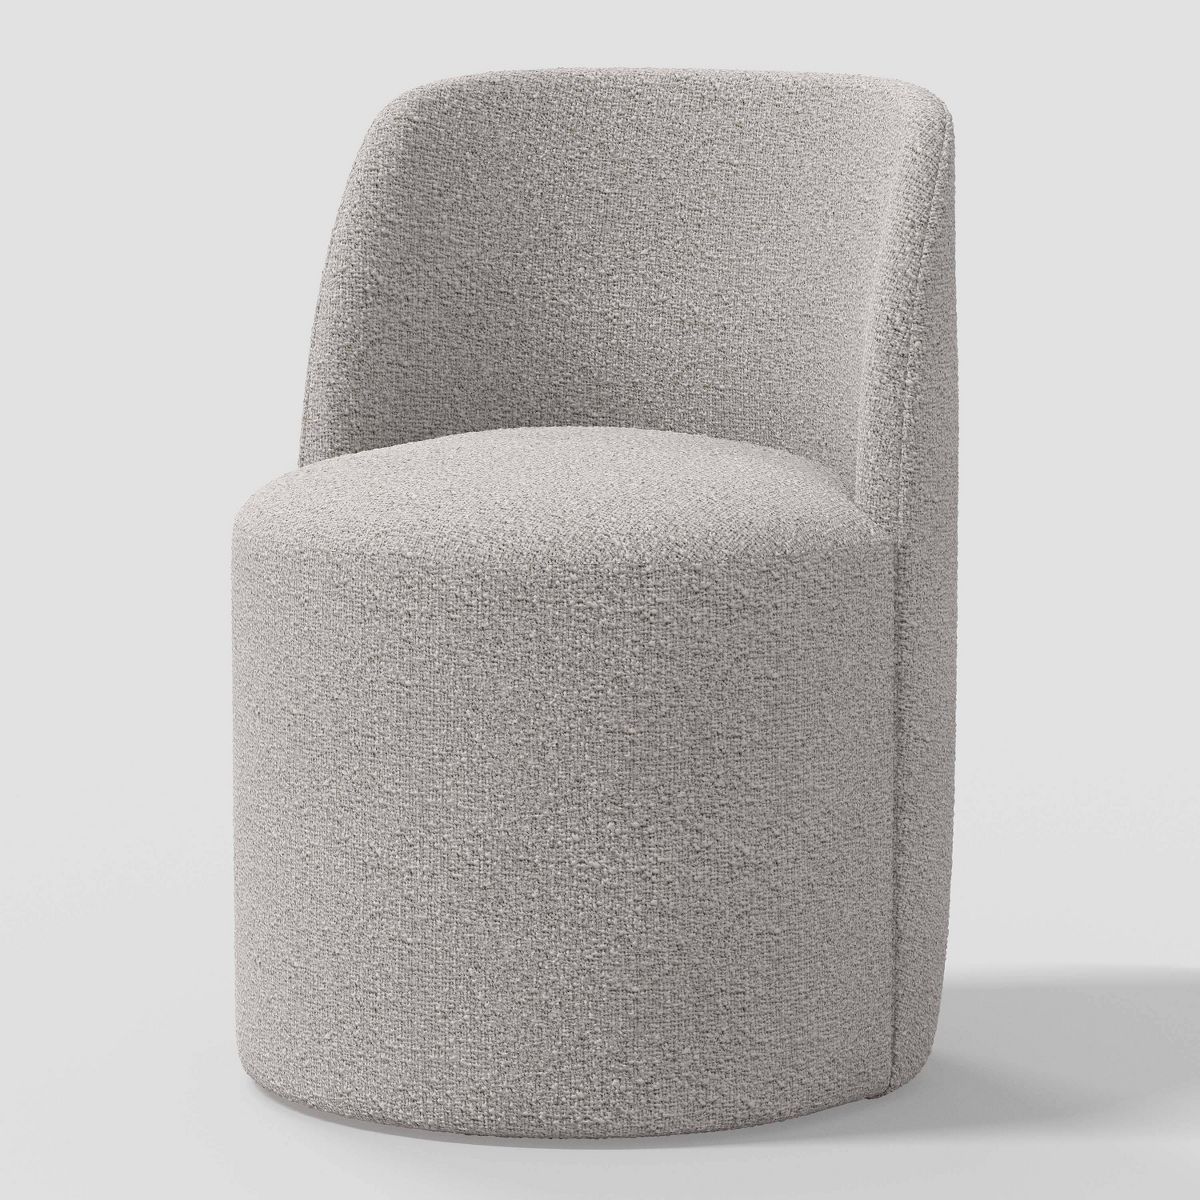 Jessa Dining Chair in Black Boucle Navarro Granite - Threshold™ | Target